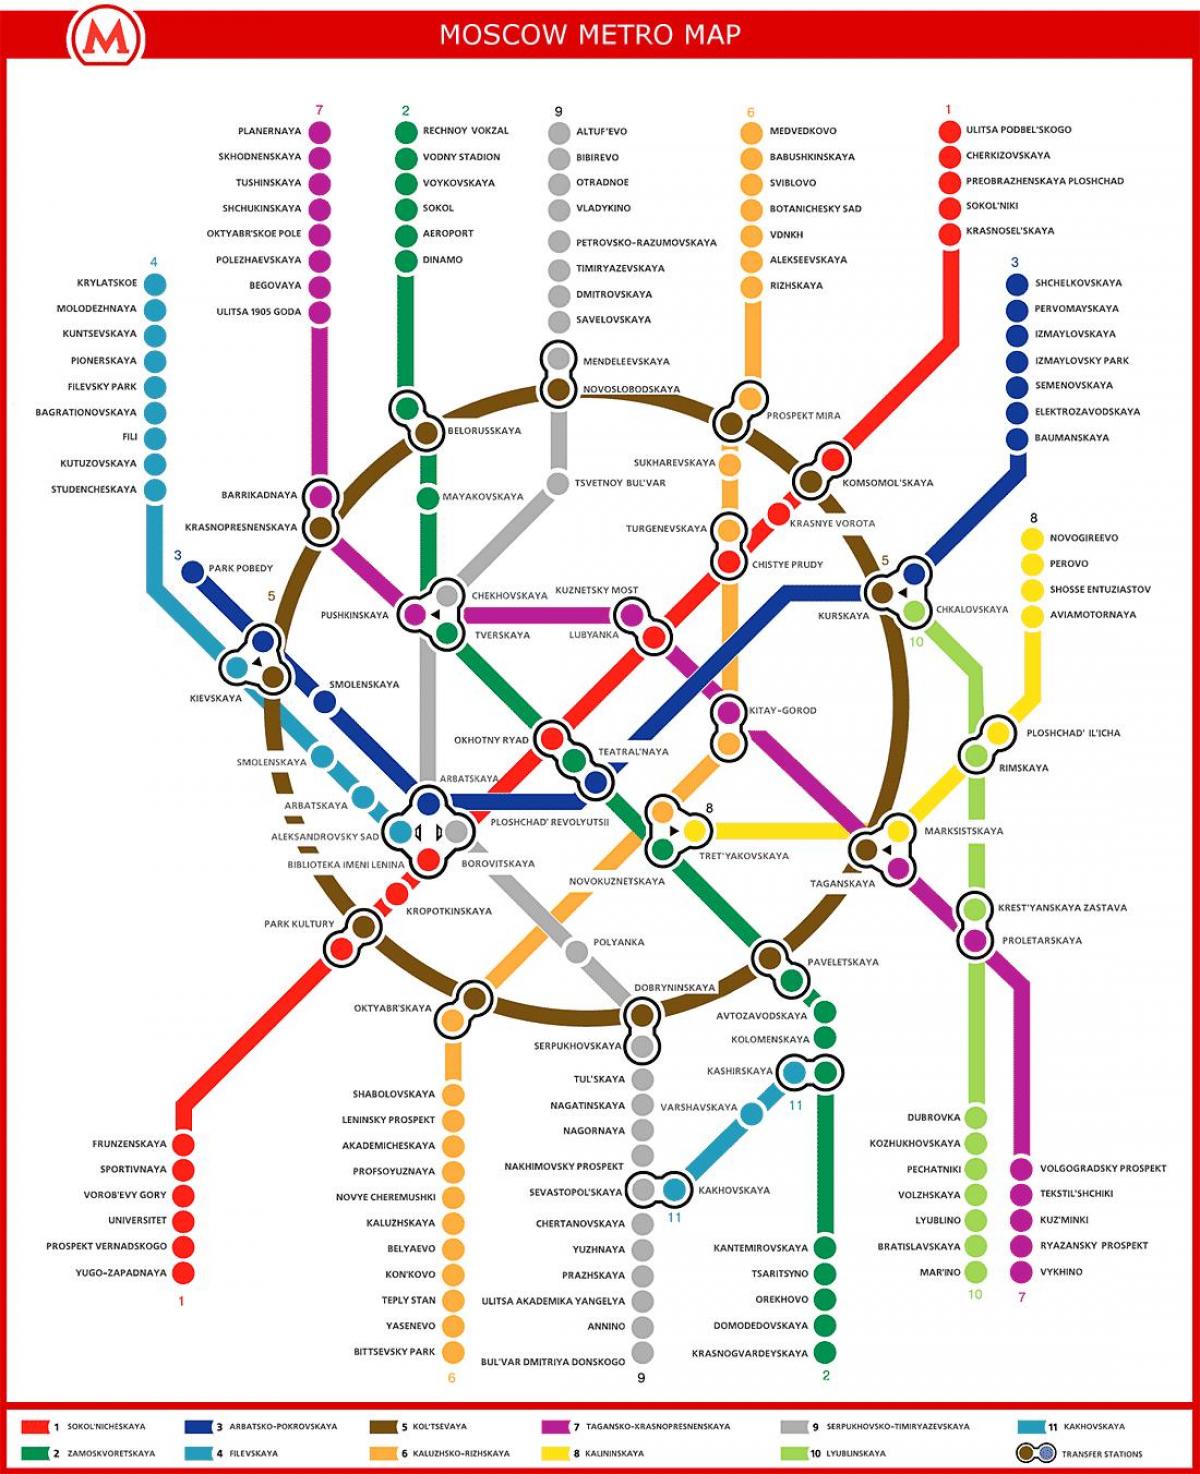 मास्को मेट्रो मानचित्र में रूसी